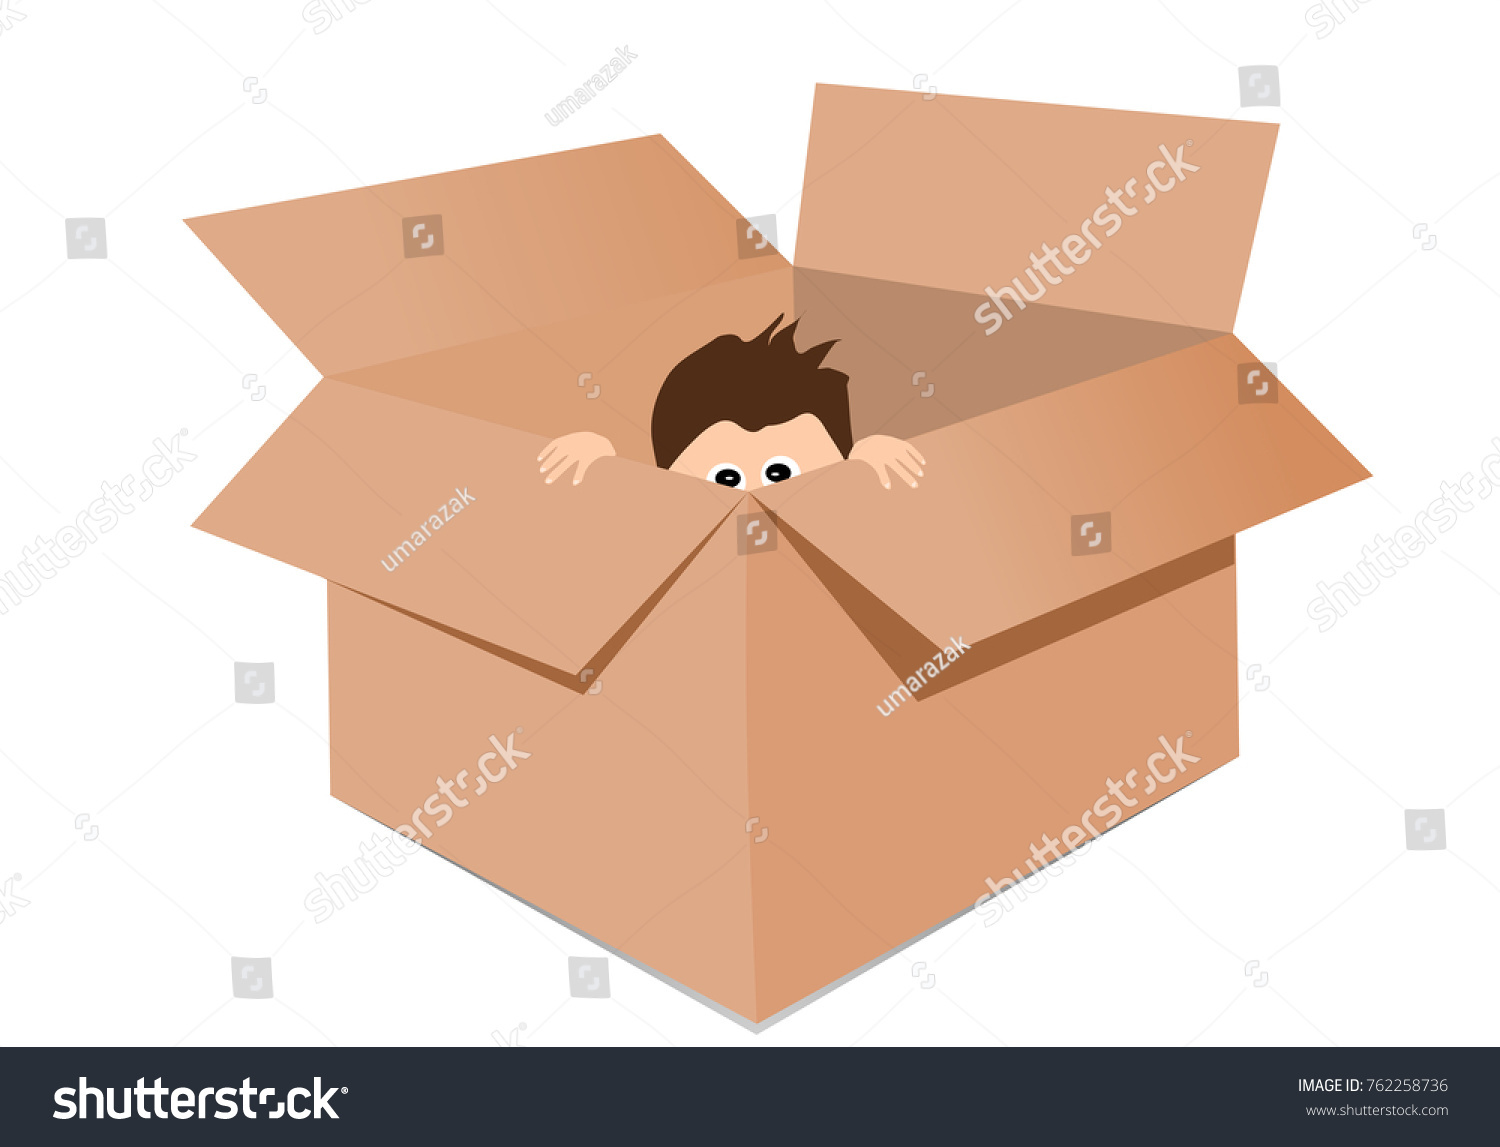 Hide in the Box рисунок. Hide inside Box. Mii inside the Box. Bounding Box Illustrator. Включи прятаться в коробках